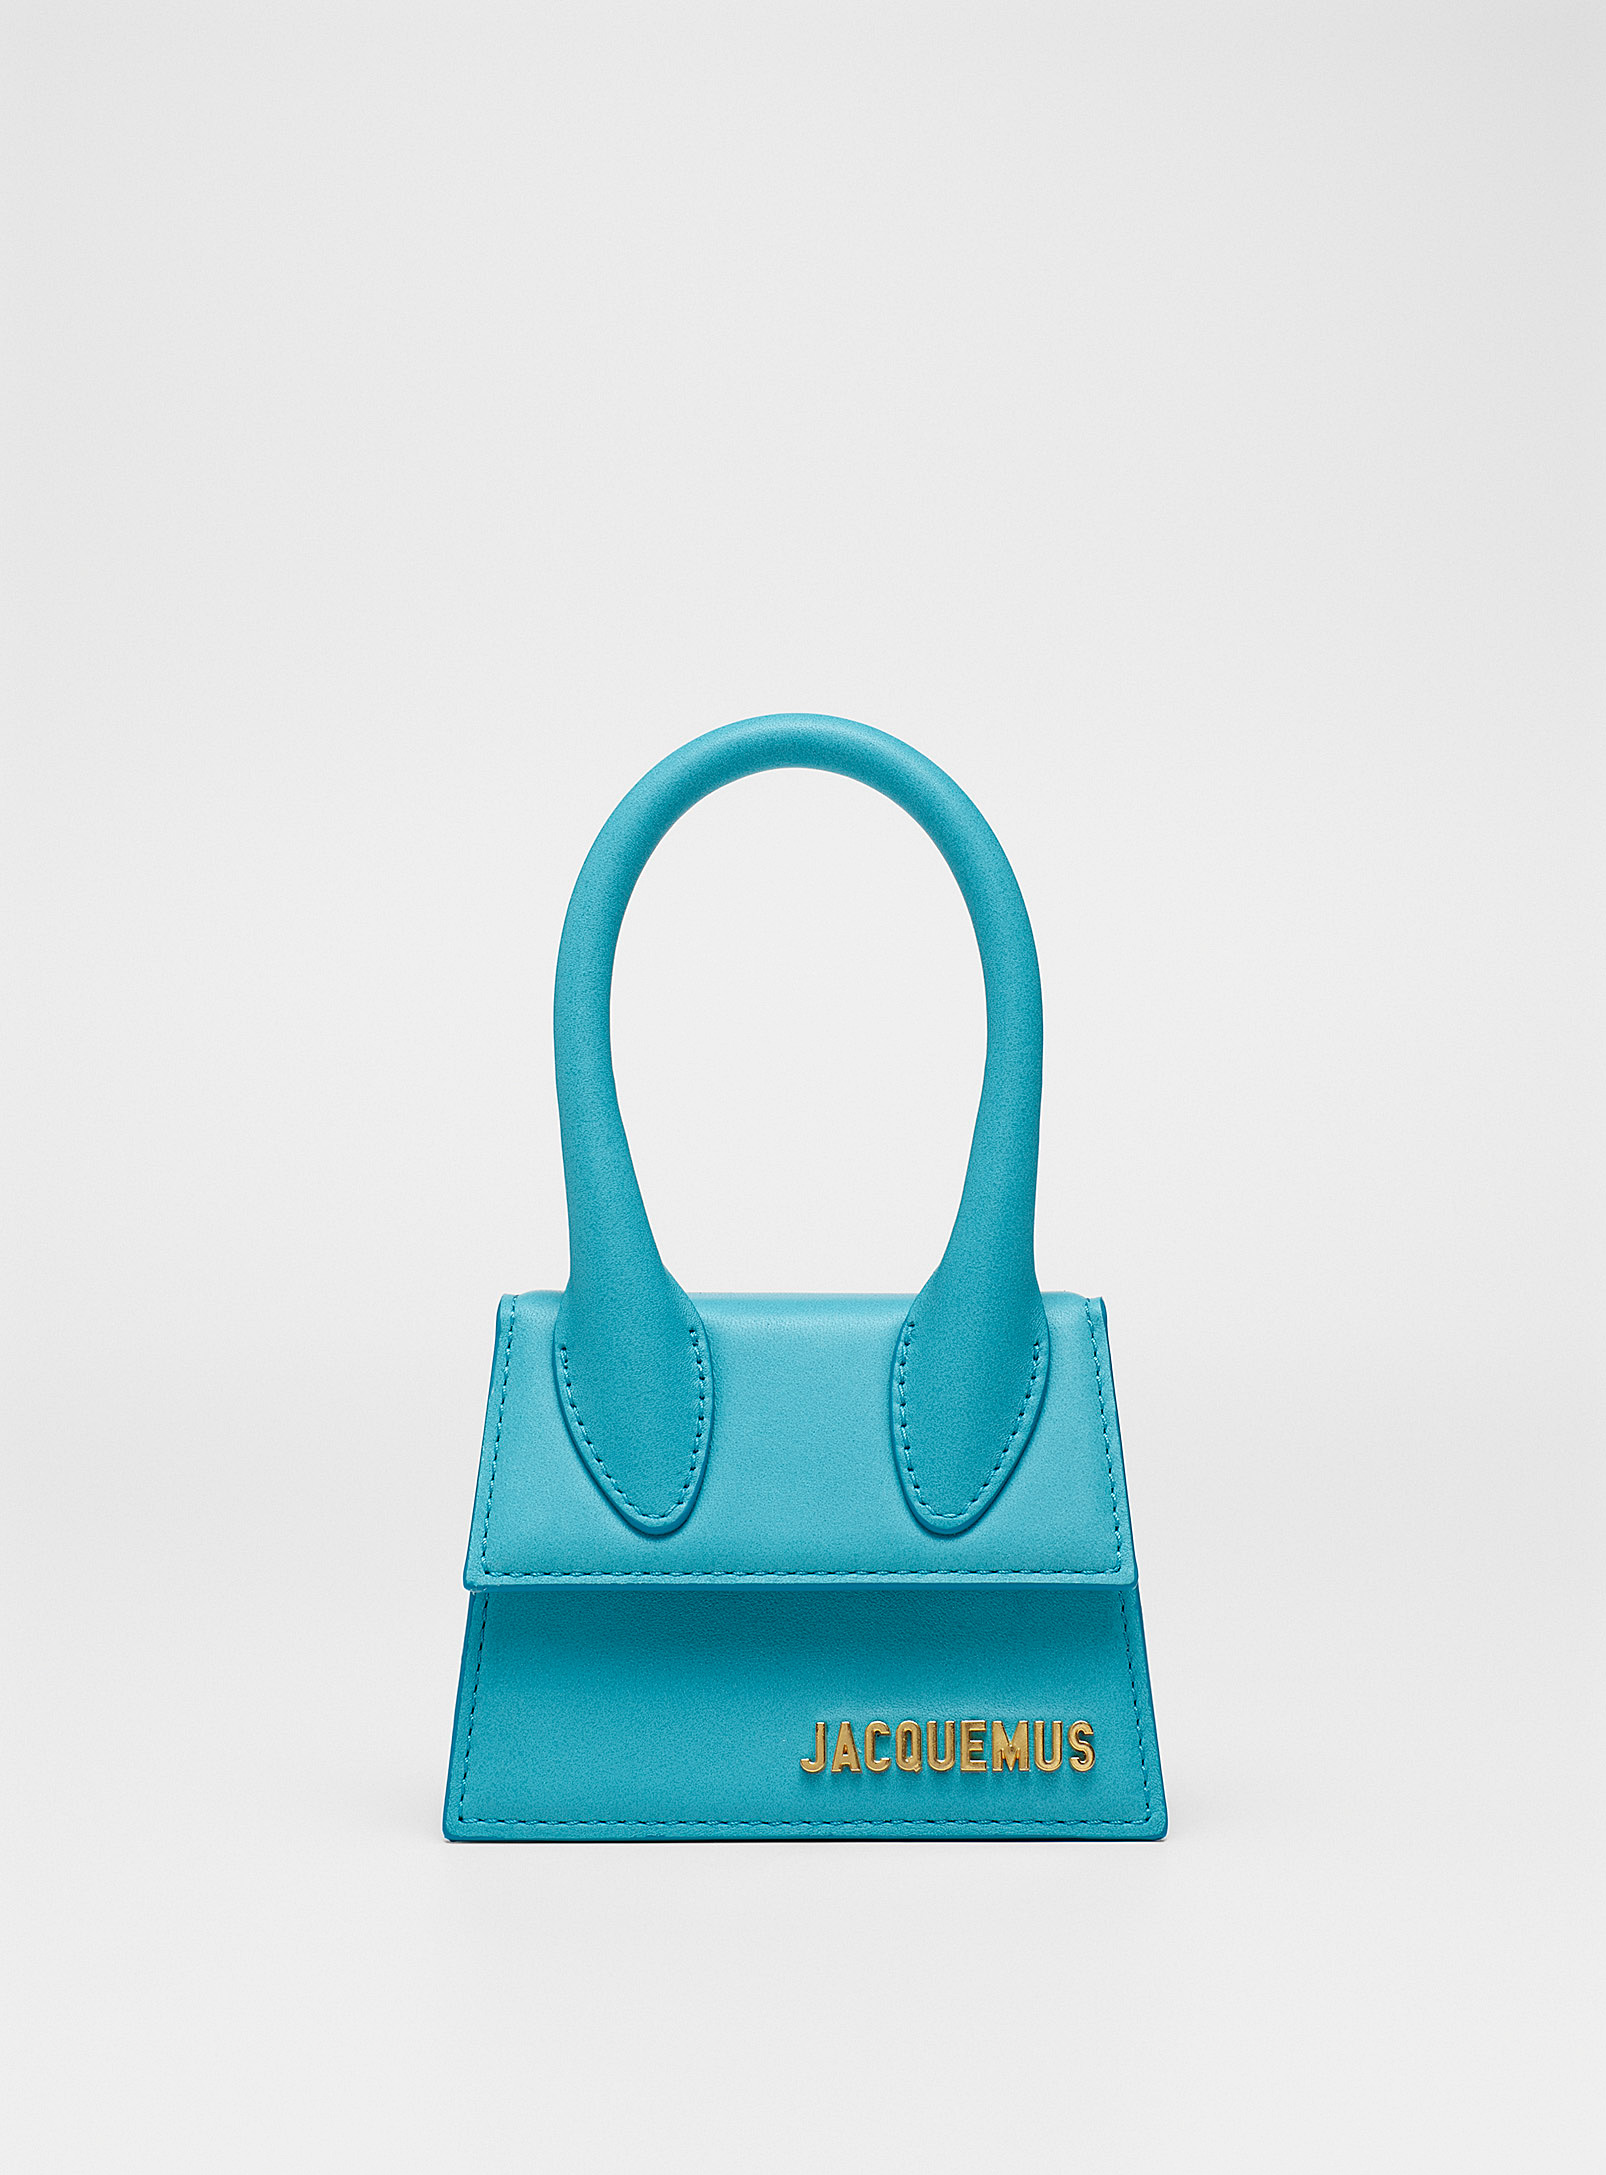 Jacquemus Chiquito Mini Bag | ModeSens